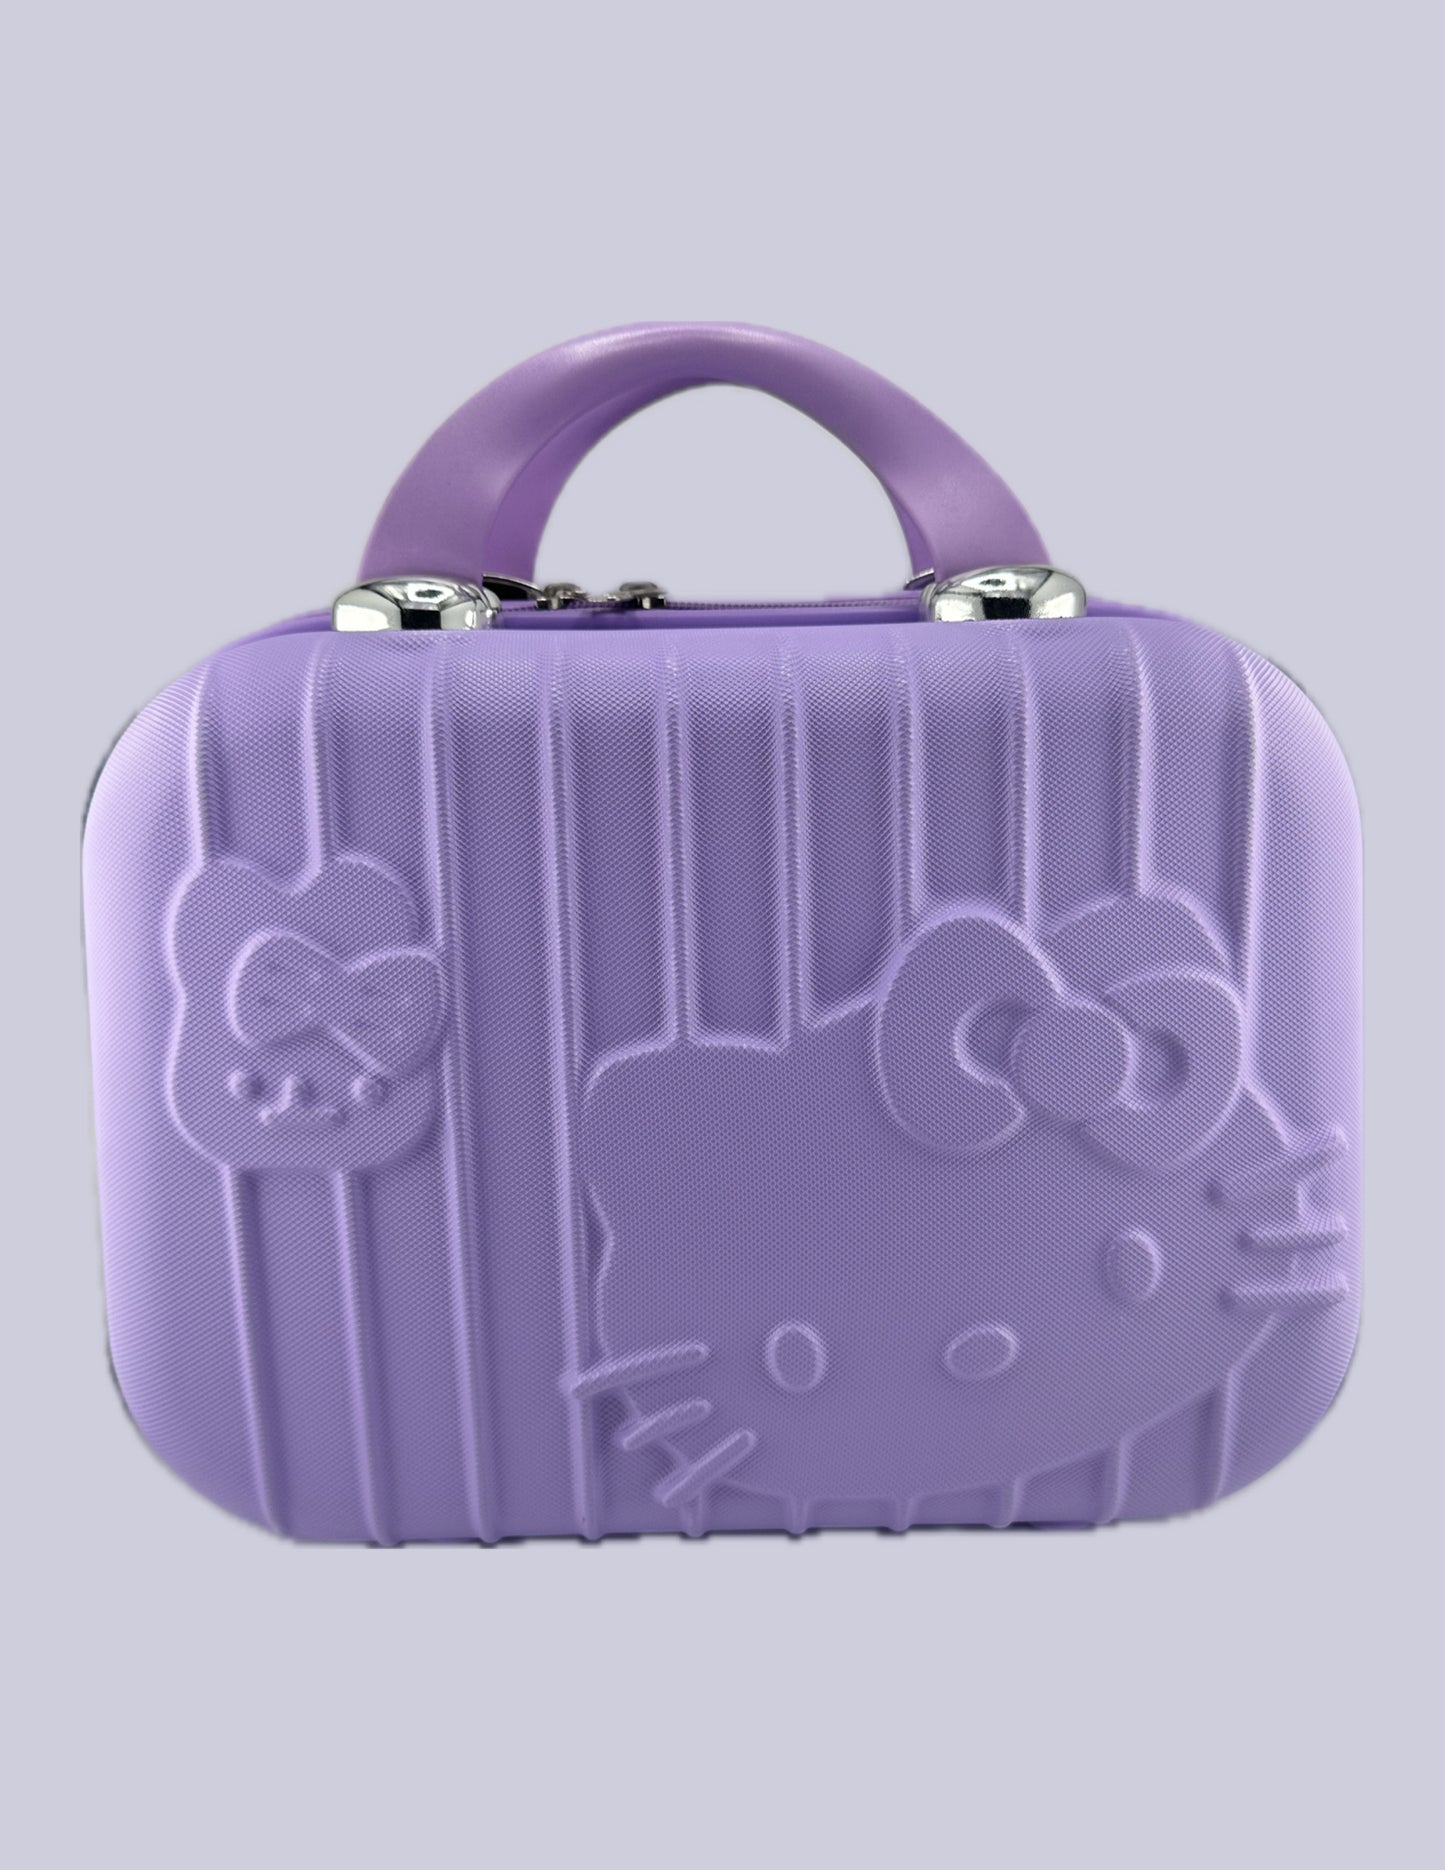 Hello Kitty purple stripe hard shell makeup case